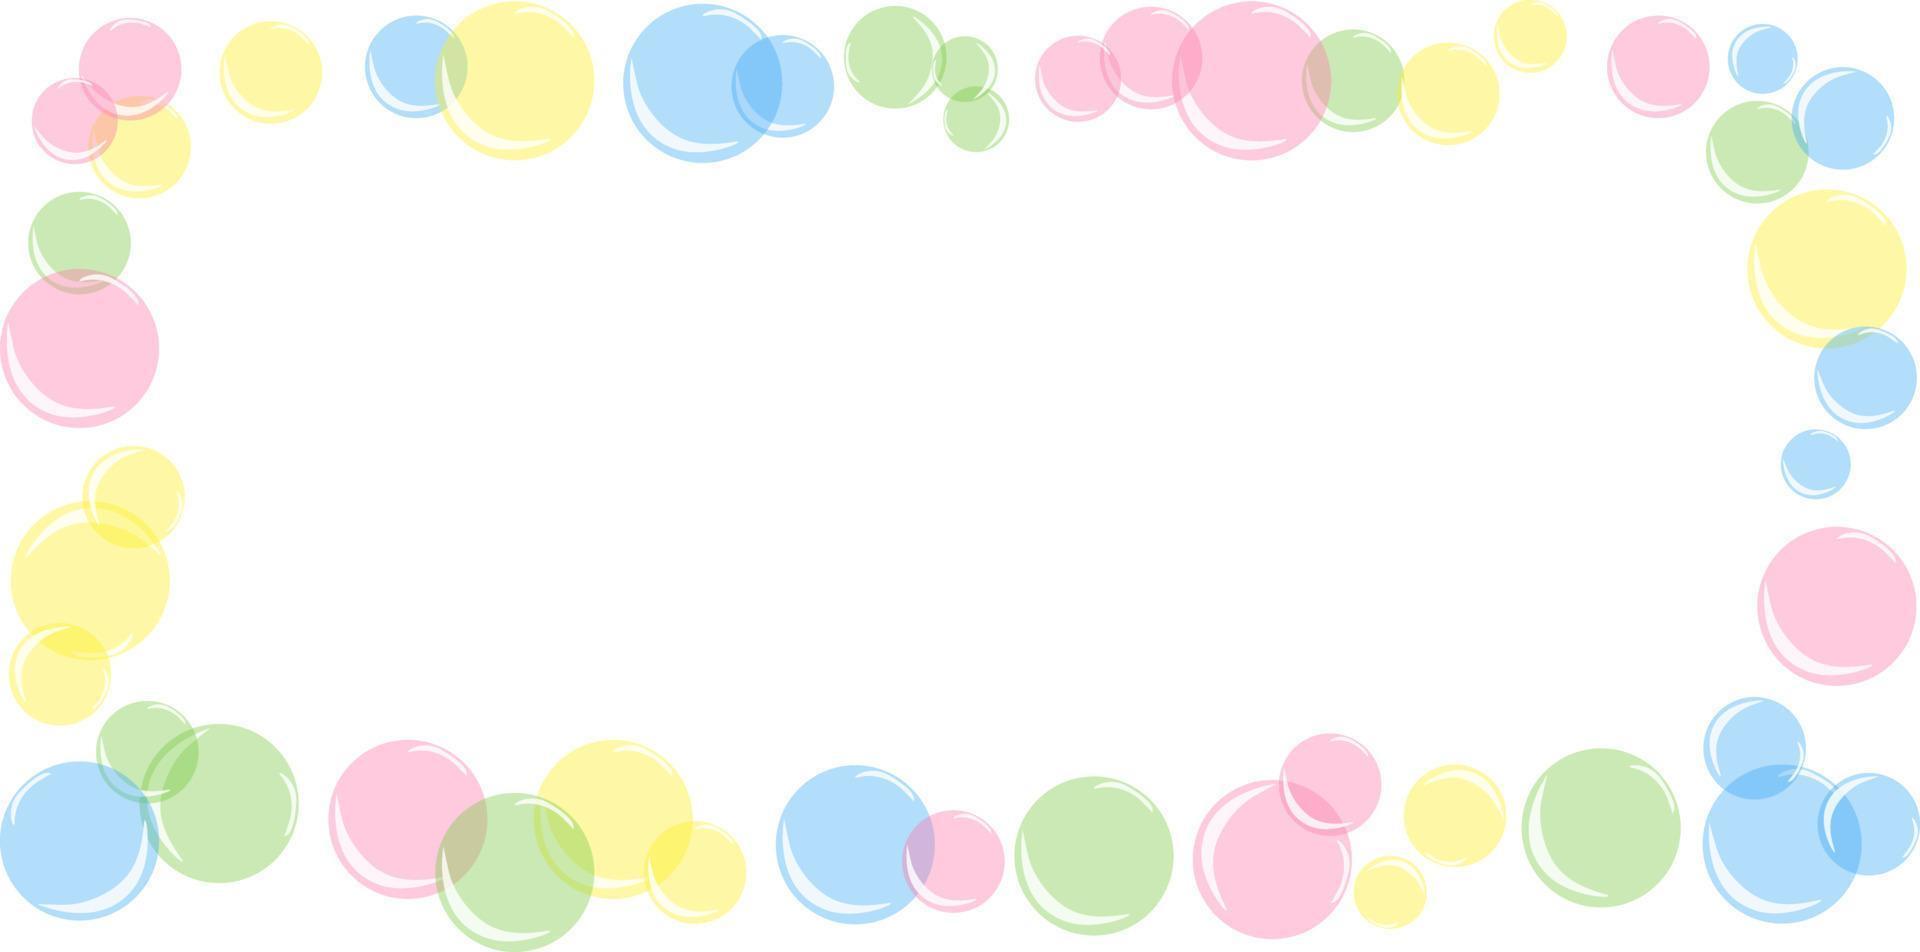 Vektor Illustration Rahmen farbig Seife Luftblasen